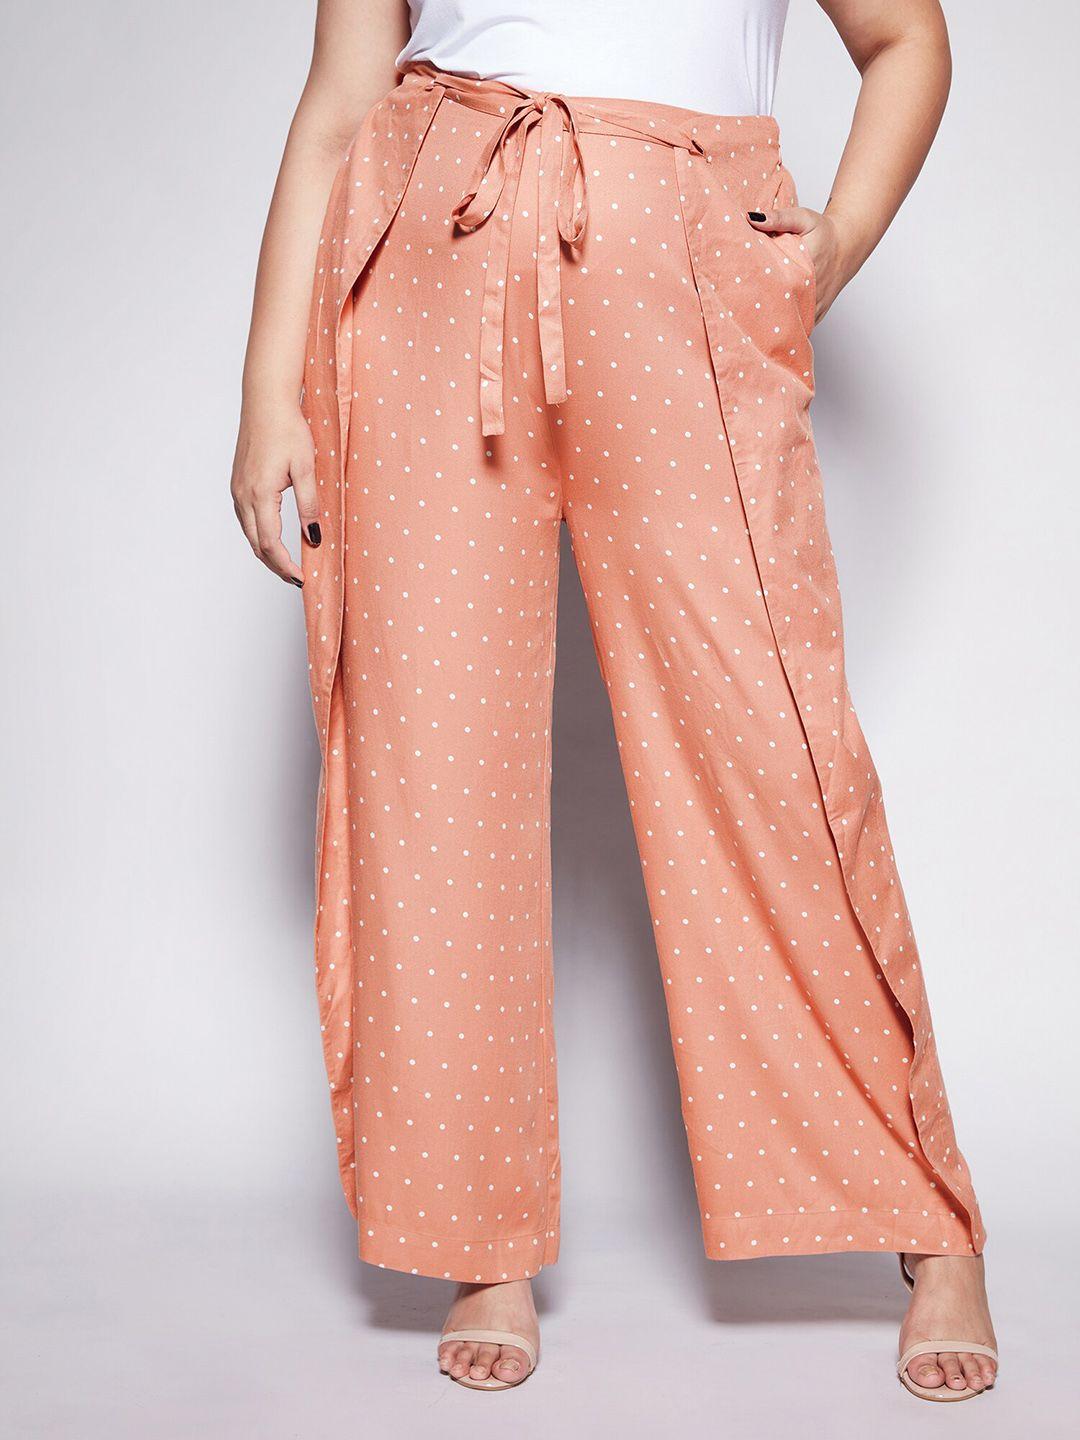 20dresses women polka dot printed comfort high-rise trousers